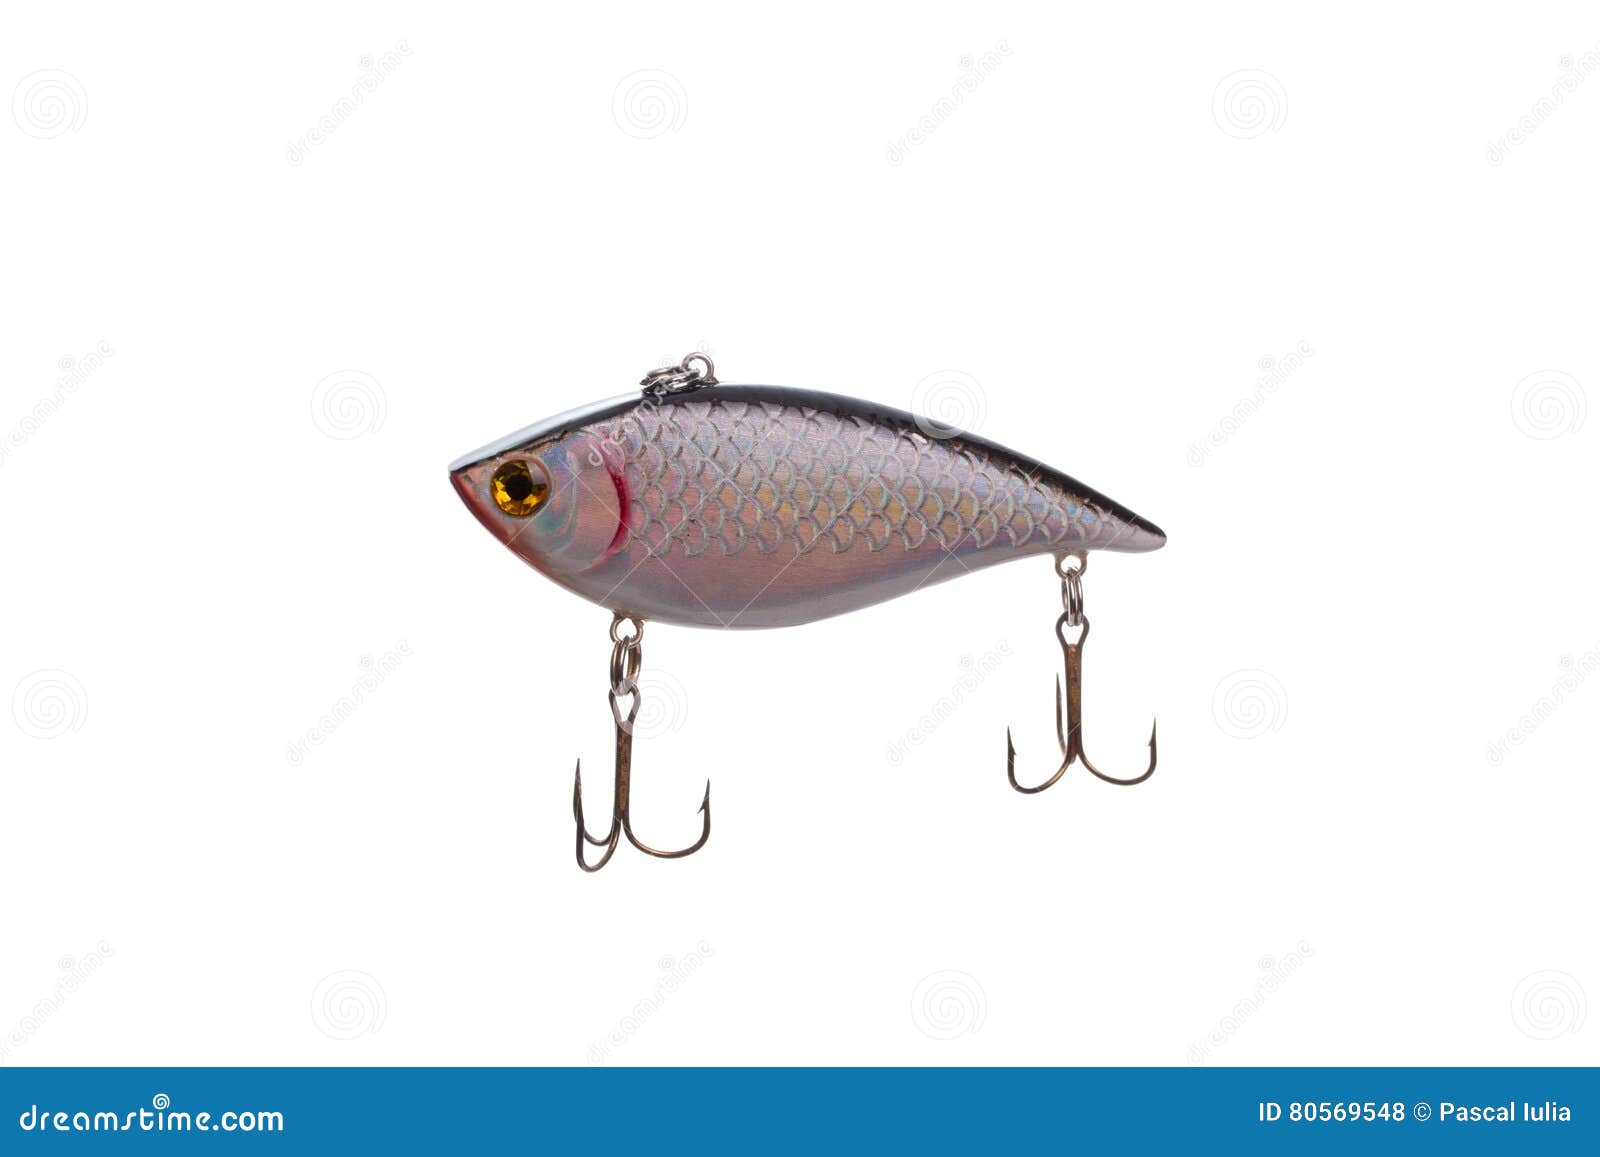 https://thumbs.dreamstime.com/z/fishing-lure-catching-predator-isolated-white-background-hard-bait-predatory-fish-equipped-triple-hooks-80569548.jpg